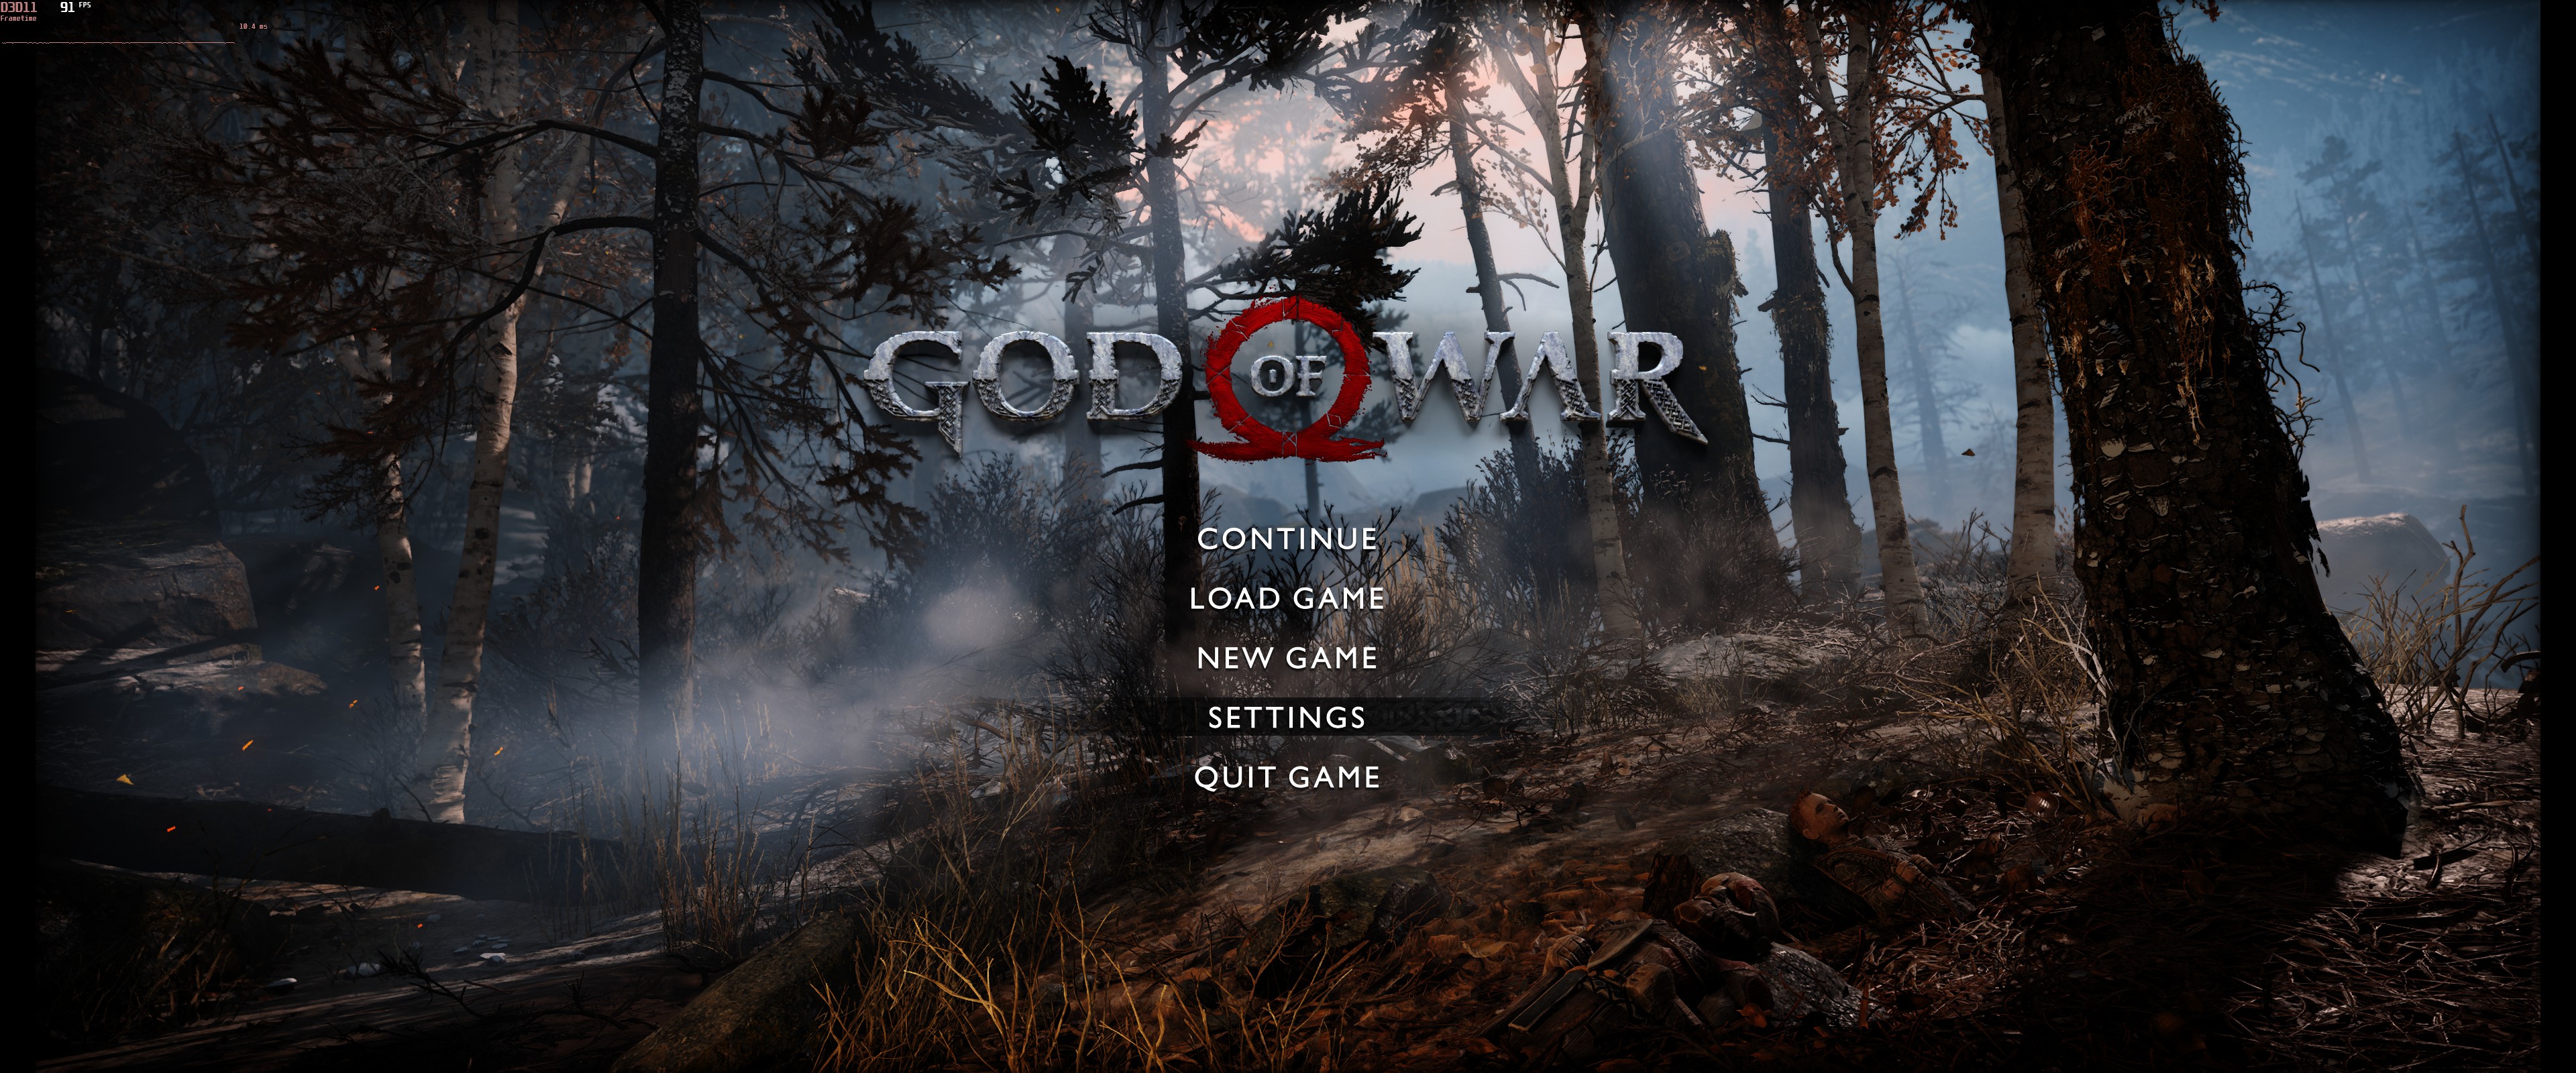 God of War en PC ofrece casi todo lo que esperábamos